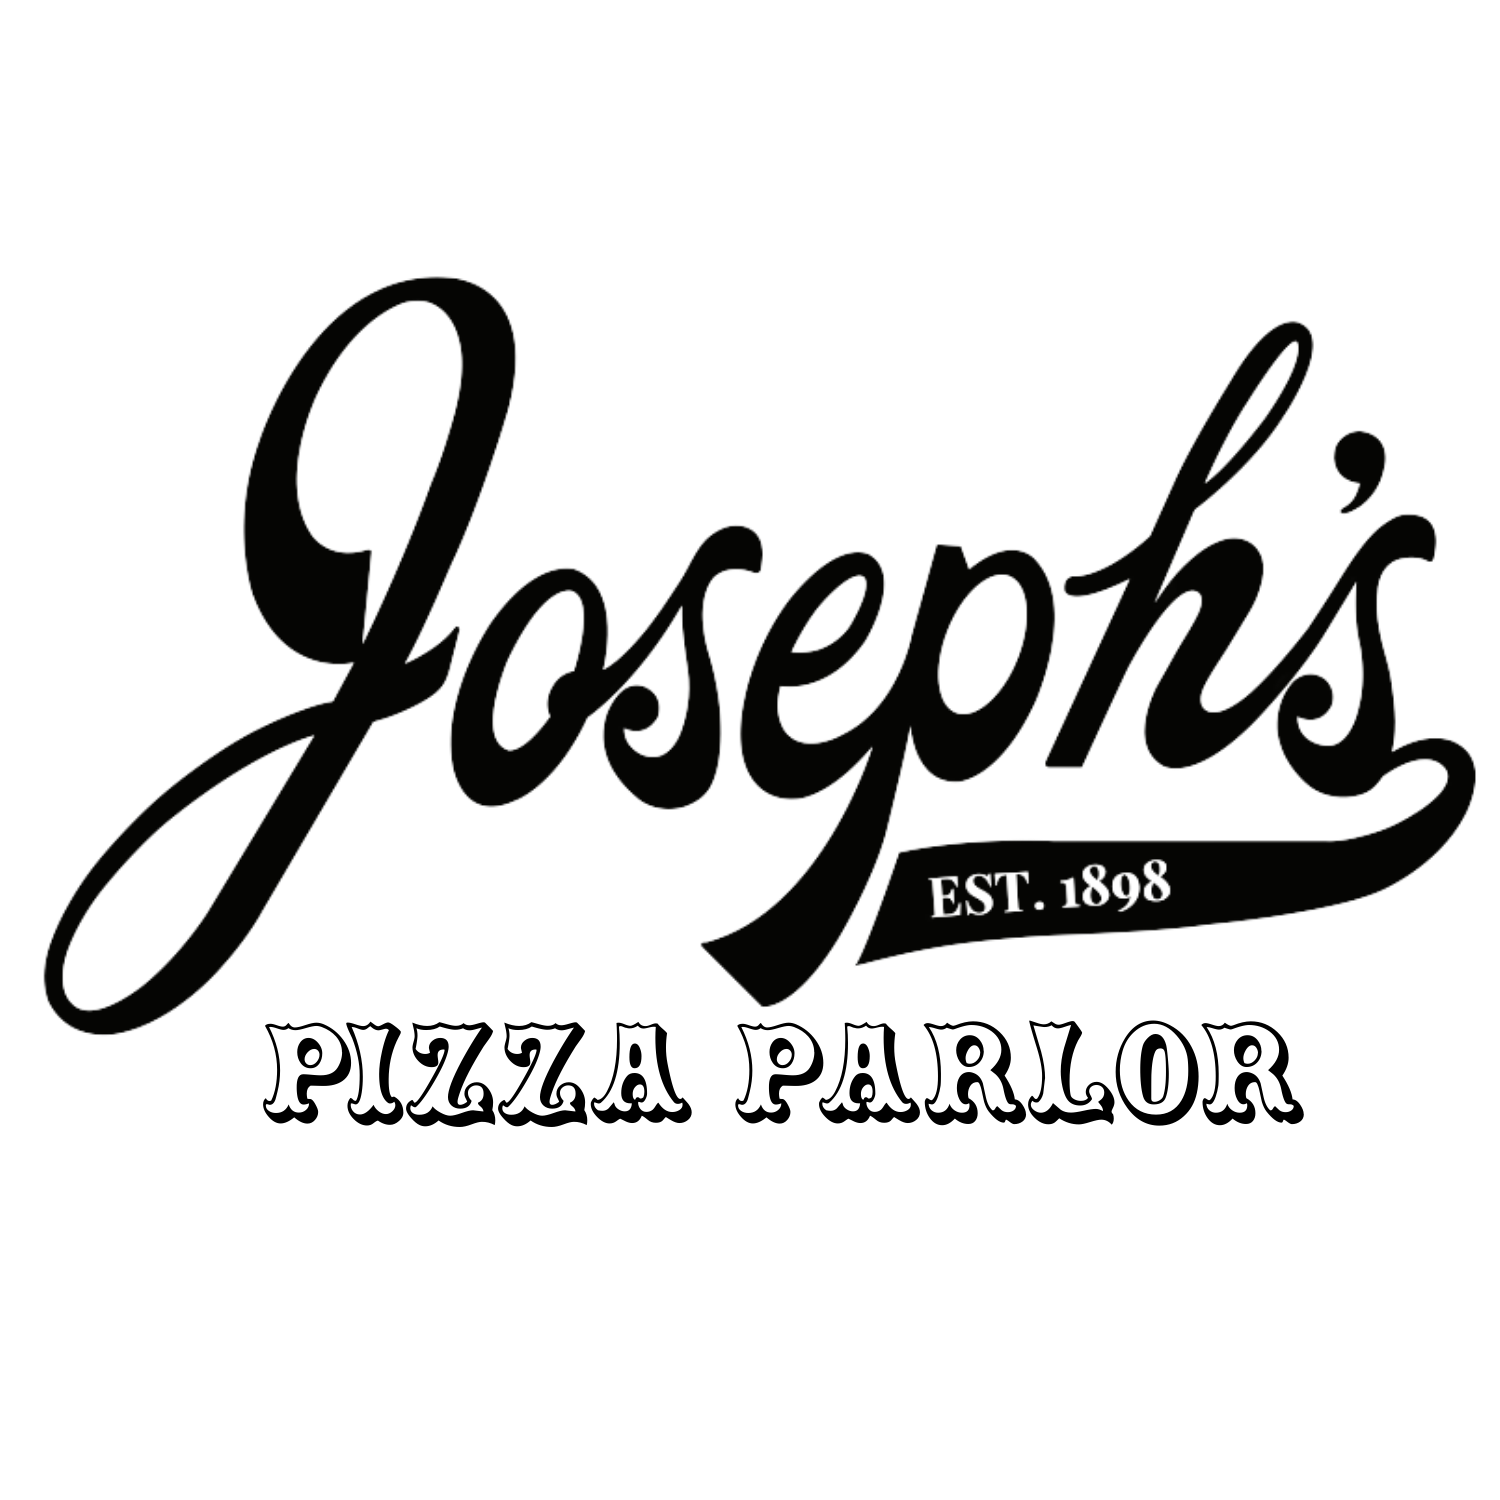 Joseph's Pizza